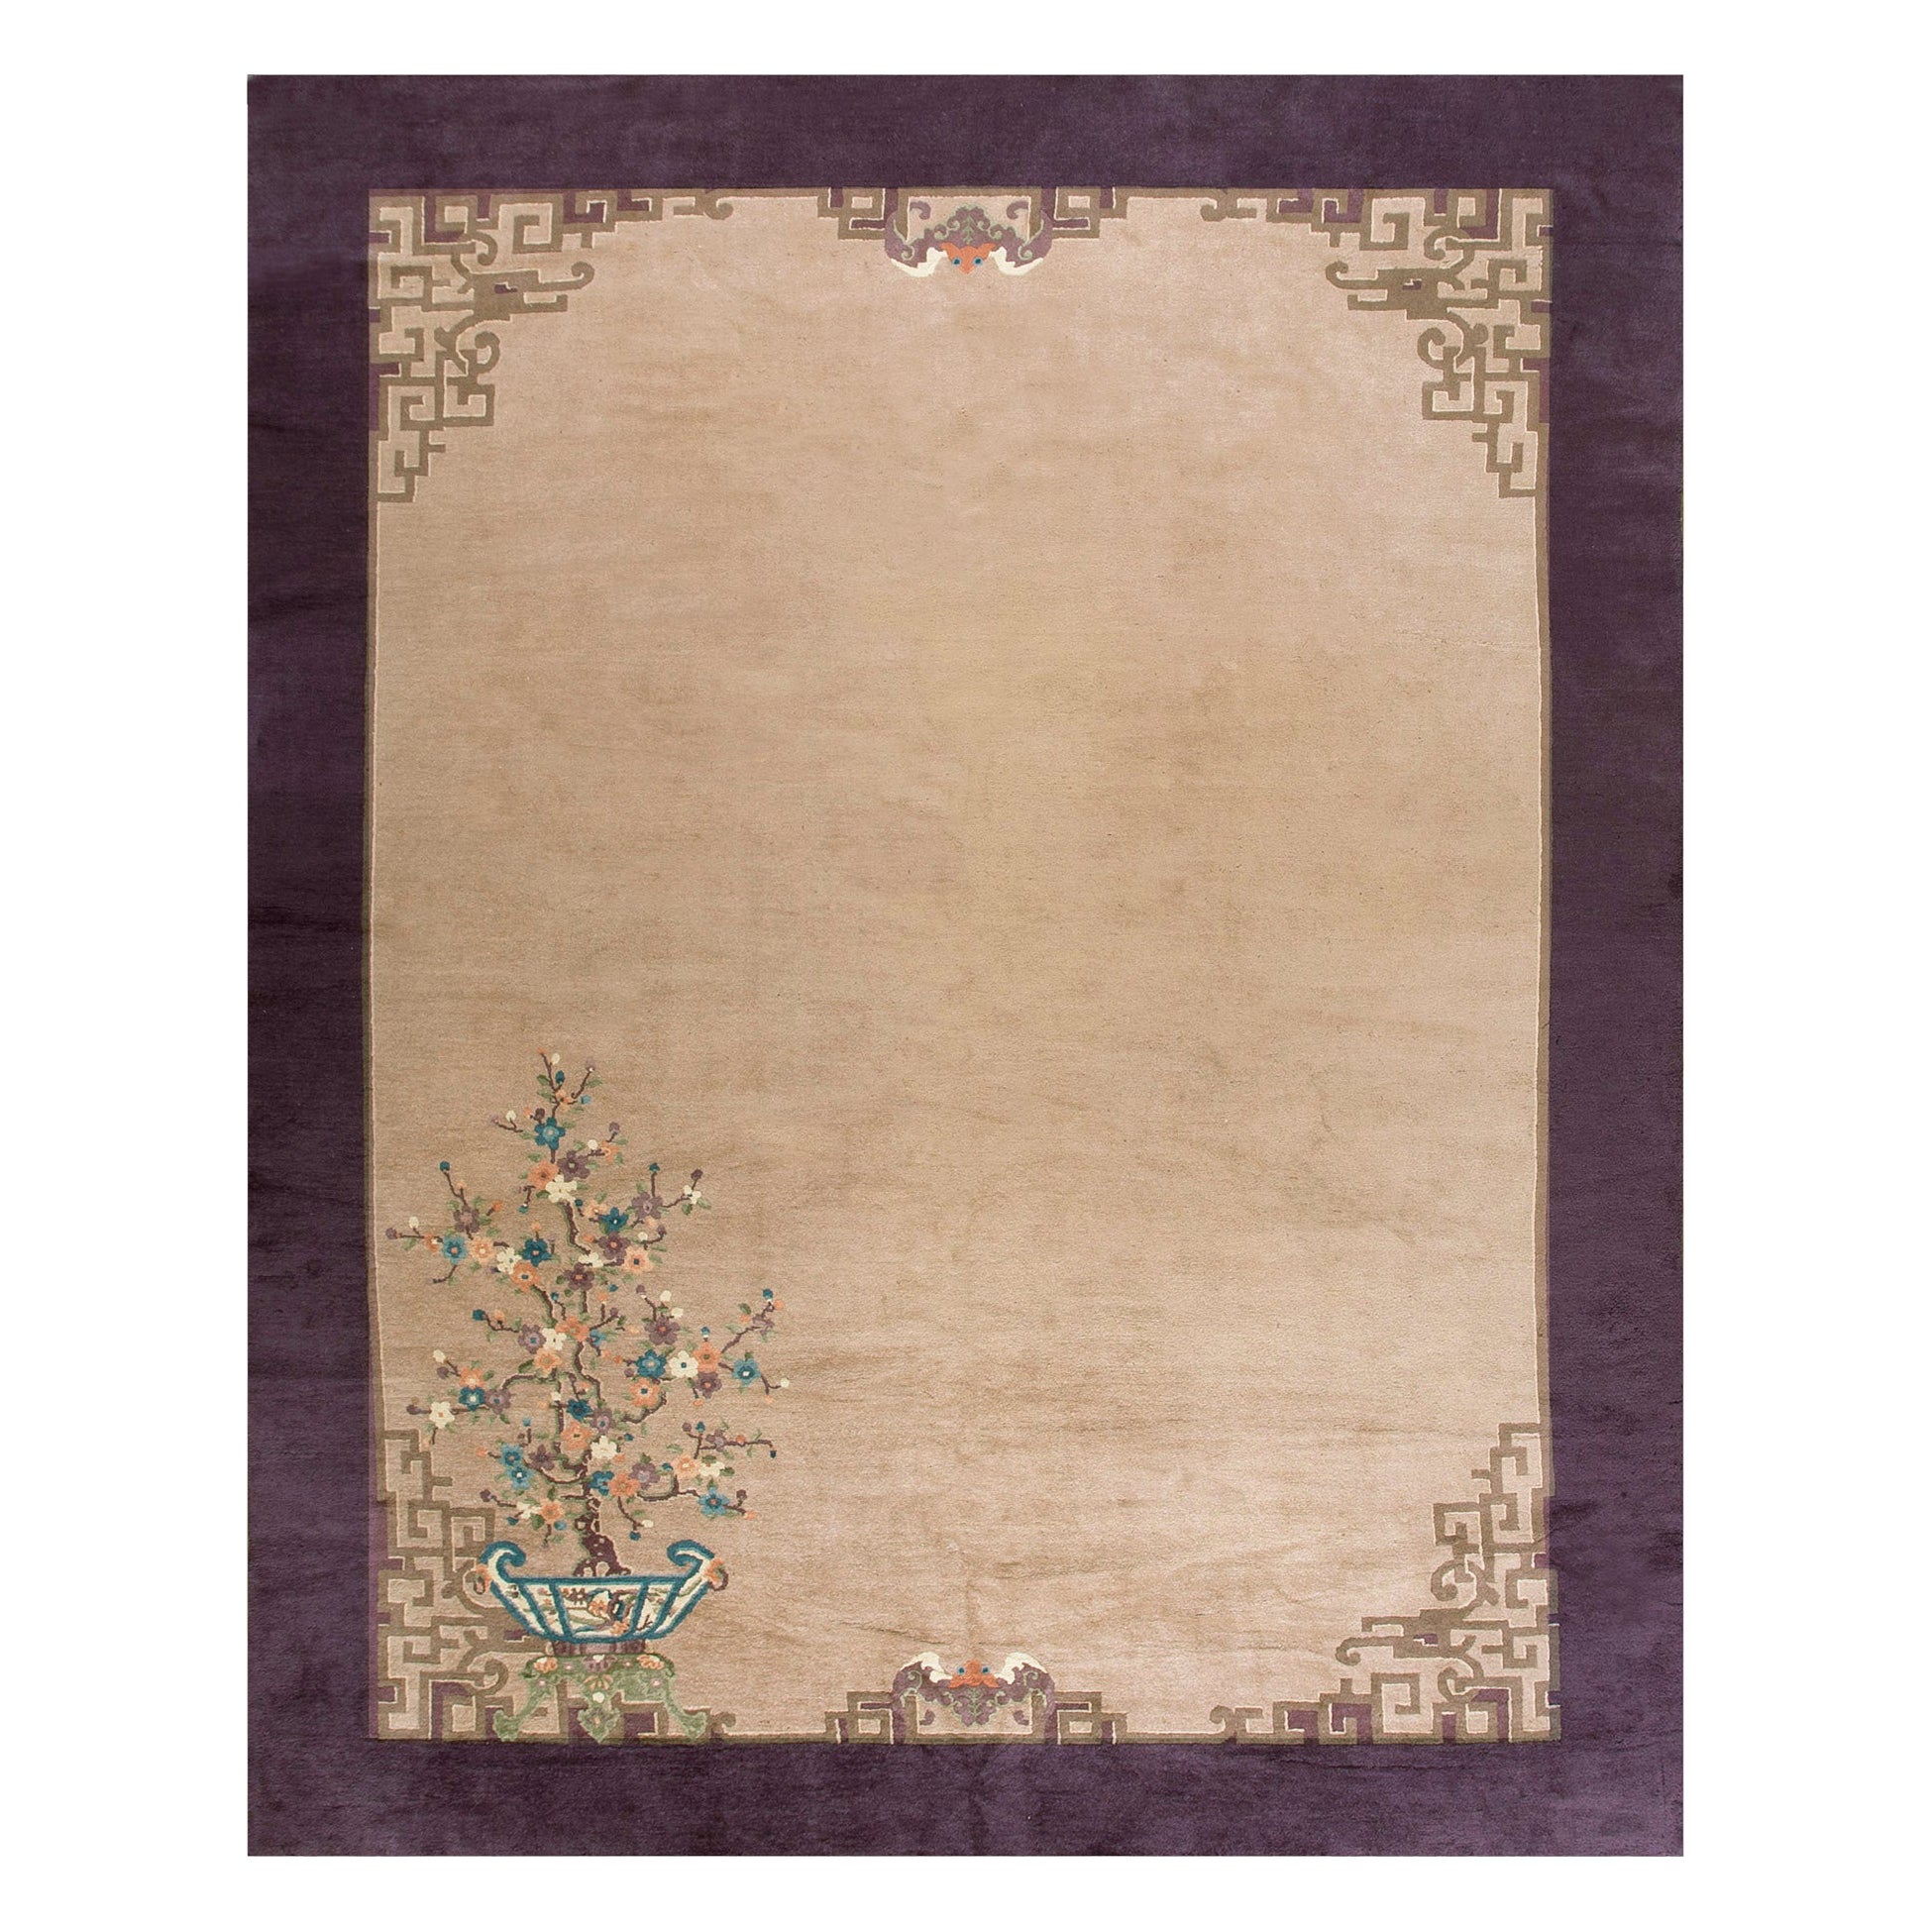 1920s Chinese Art Deco Carpet ( 9'3'' x 11'8'' - 282 x 282 x 355 )